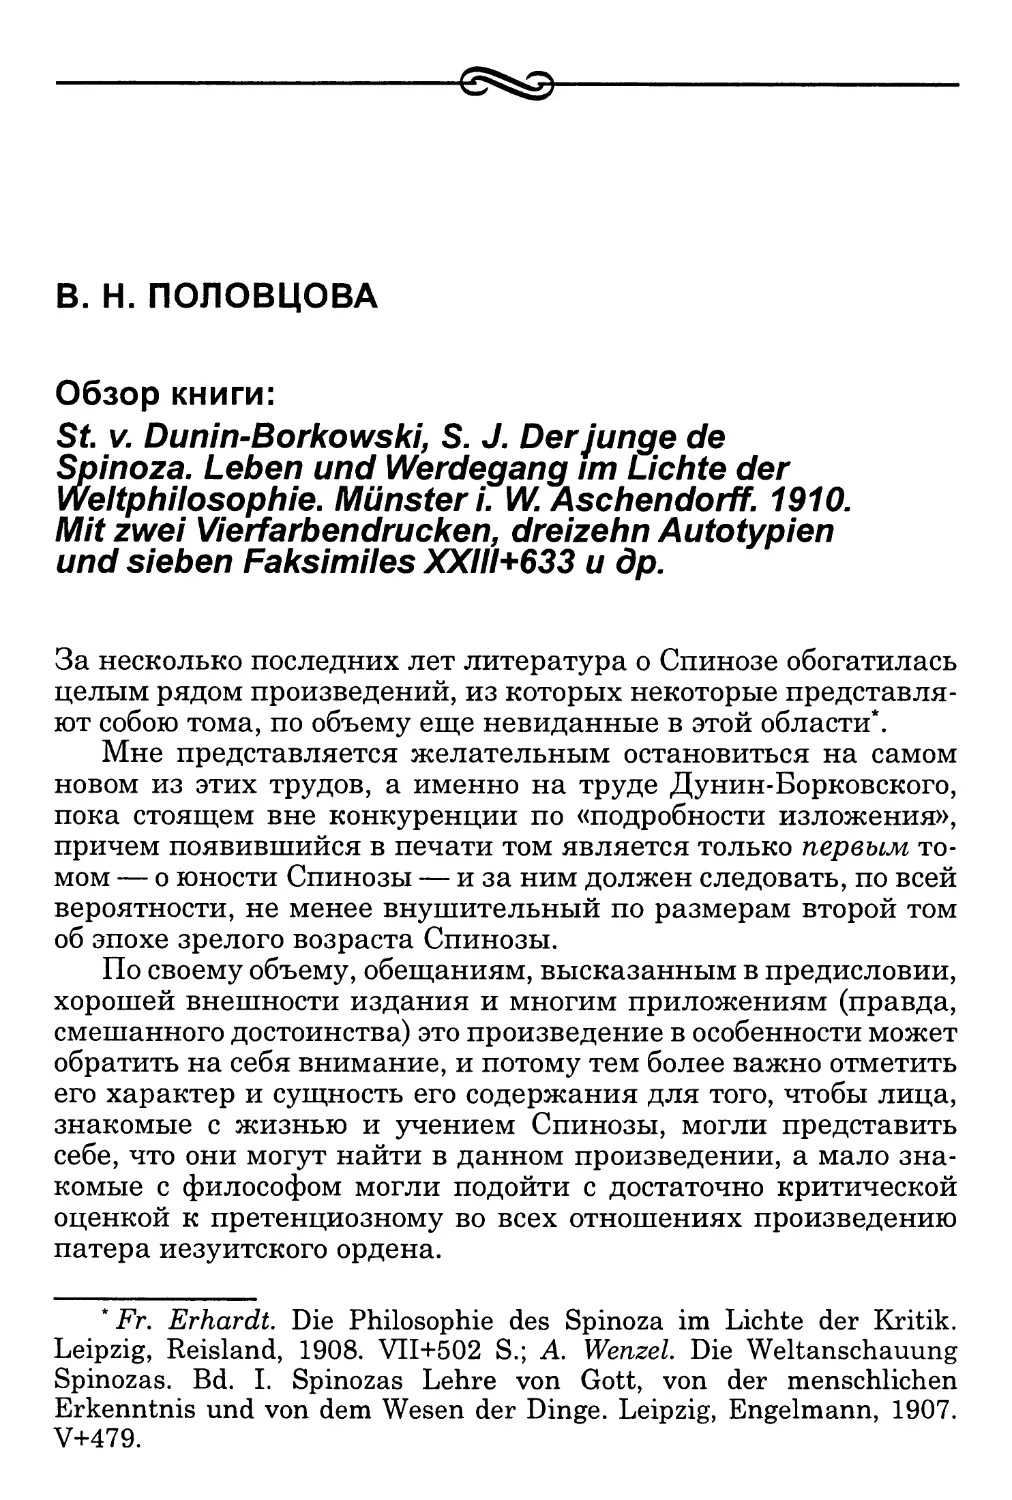 Половцова В. Н. Обзор книги: St. v. Dunin-Borkowski, S. J. Der junge de Spinoza